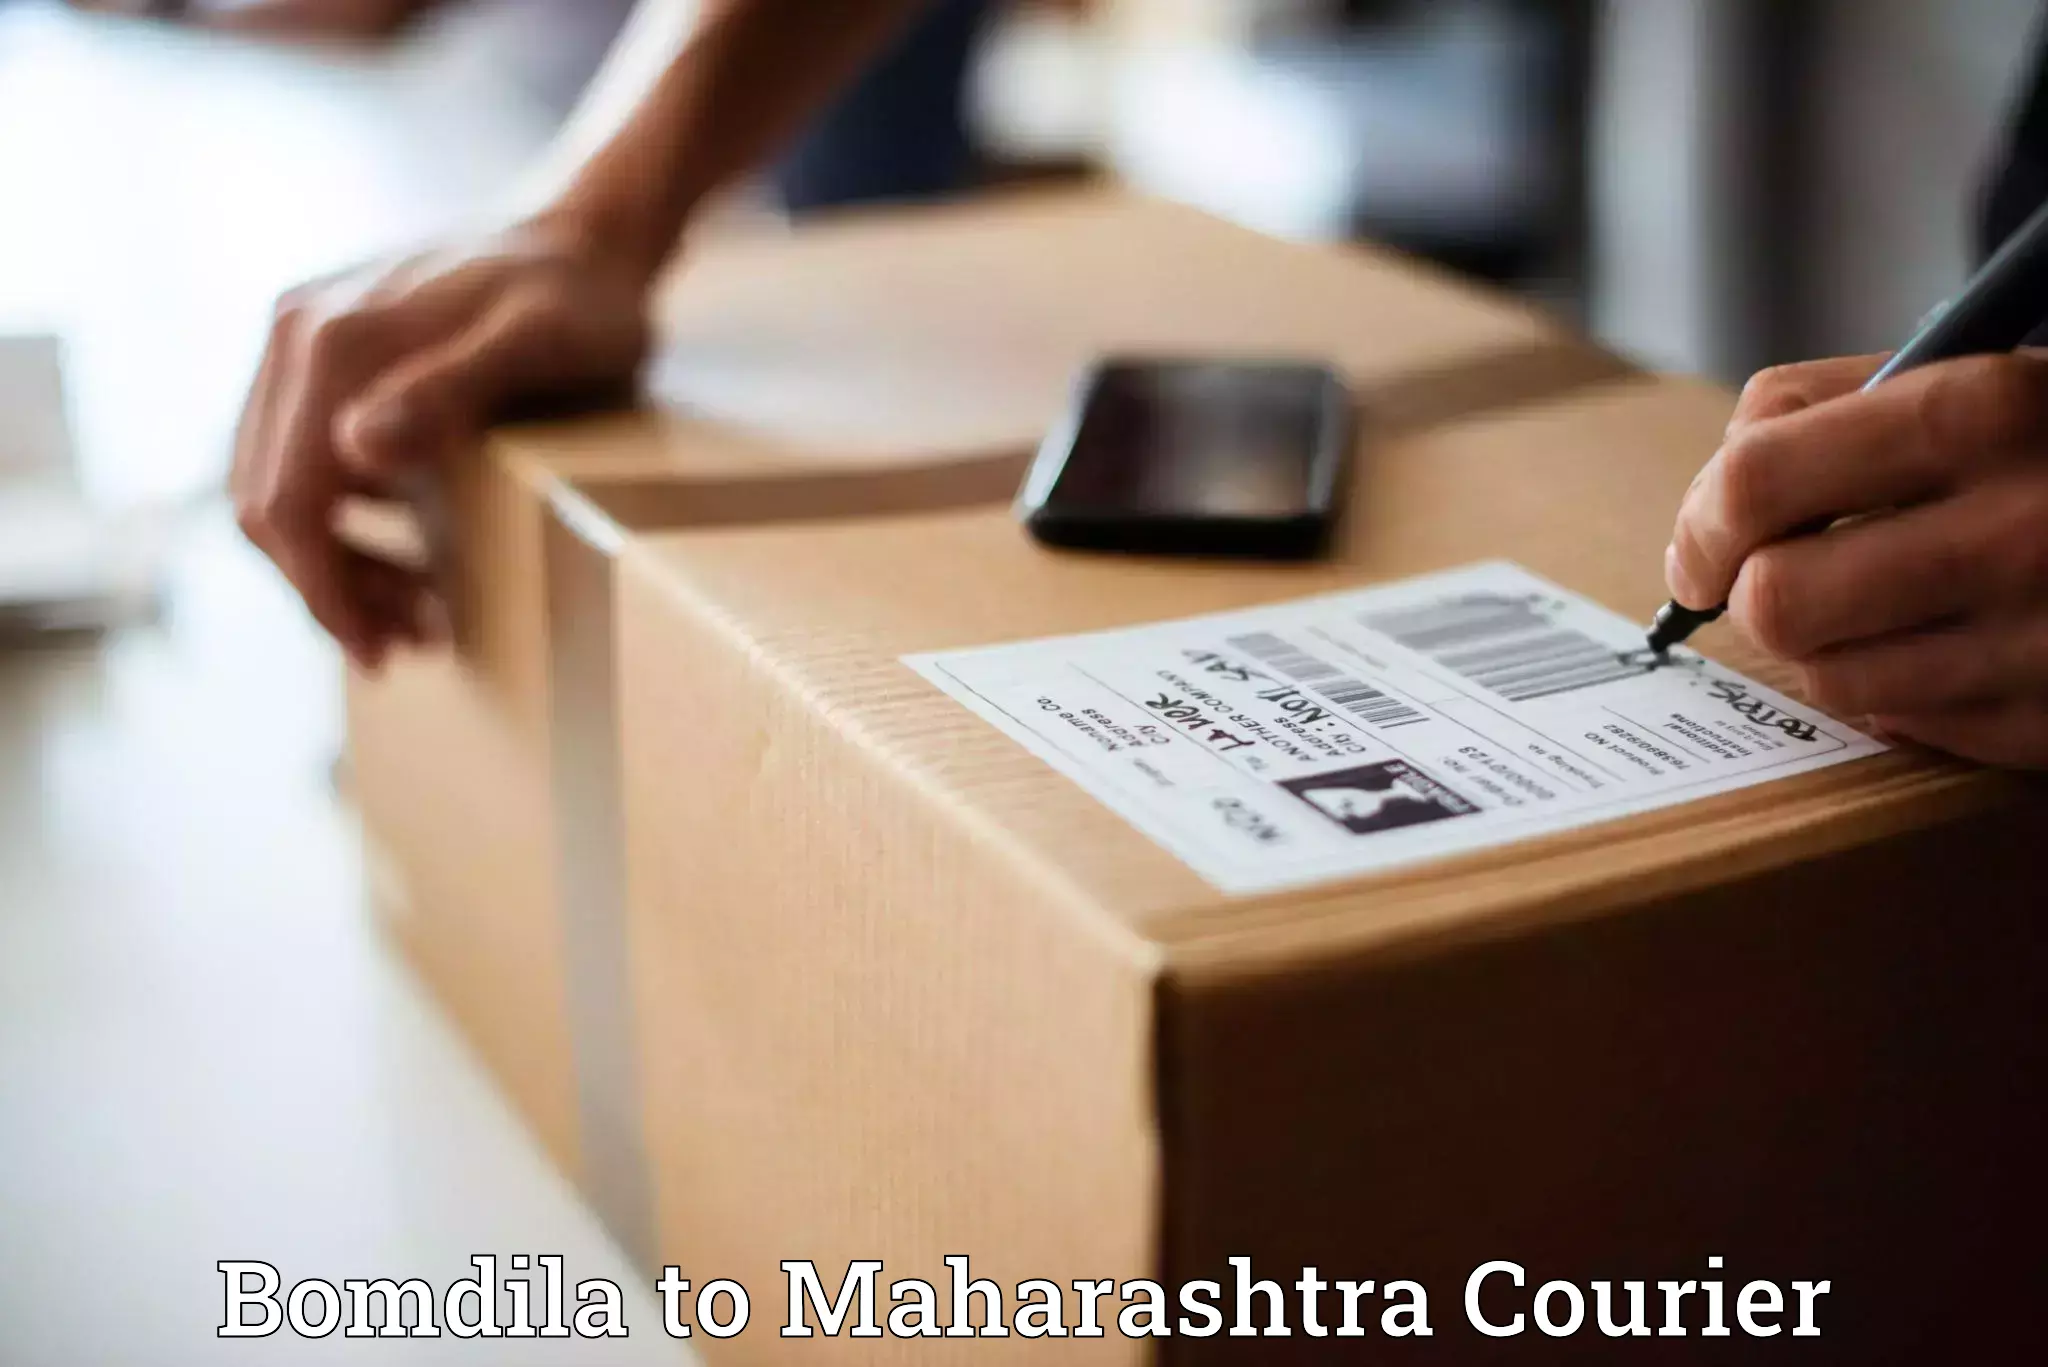 Expedited shipping methods Bomdila to Raigarh Maharashtra